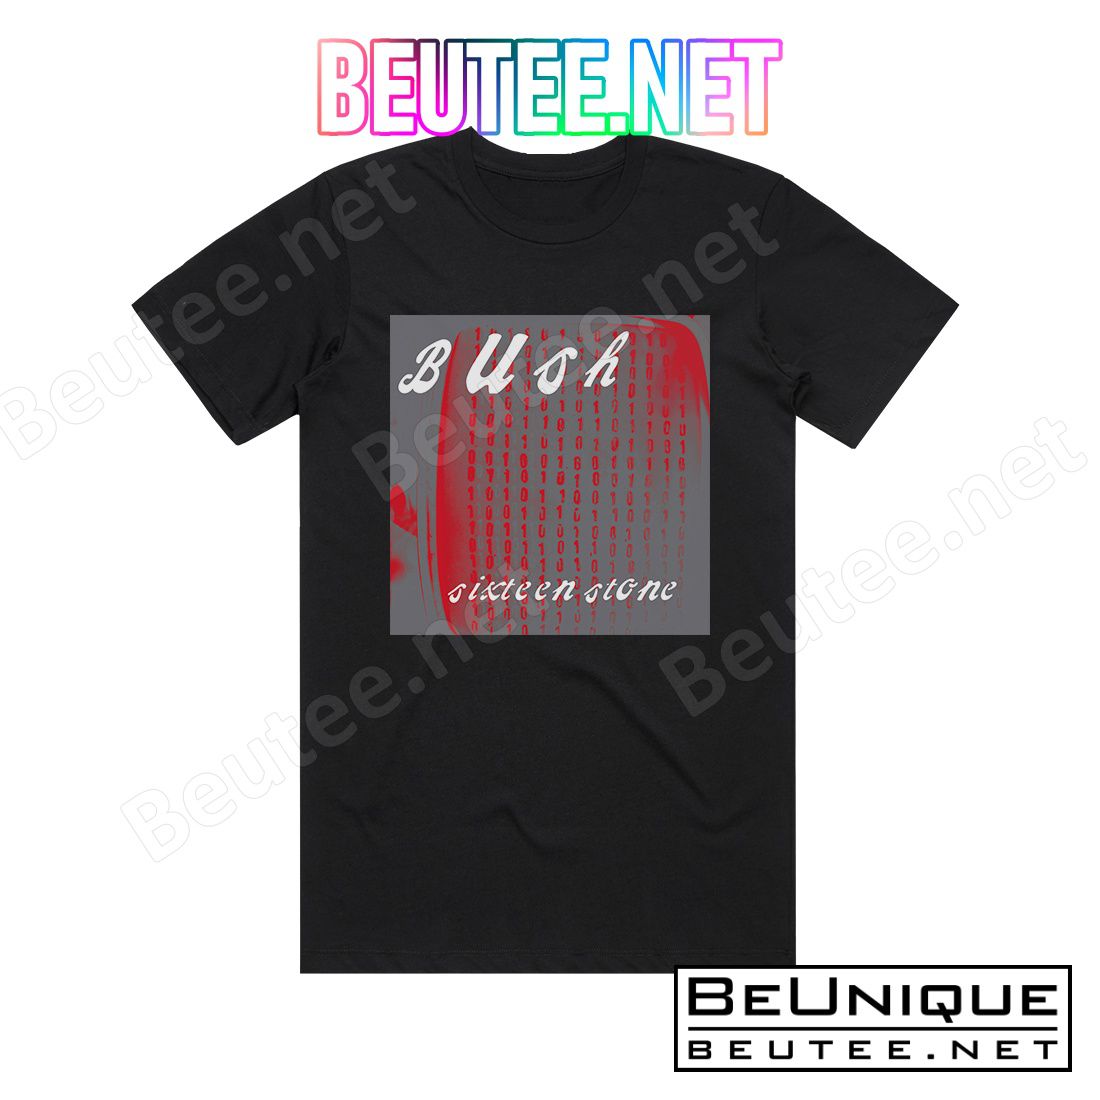 Bush Sixteen Stone Album Cover T-Shirt